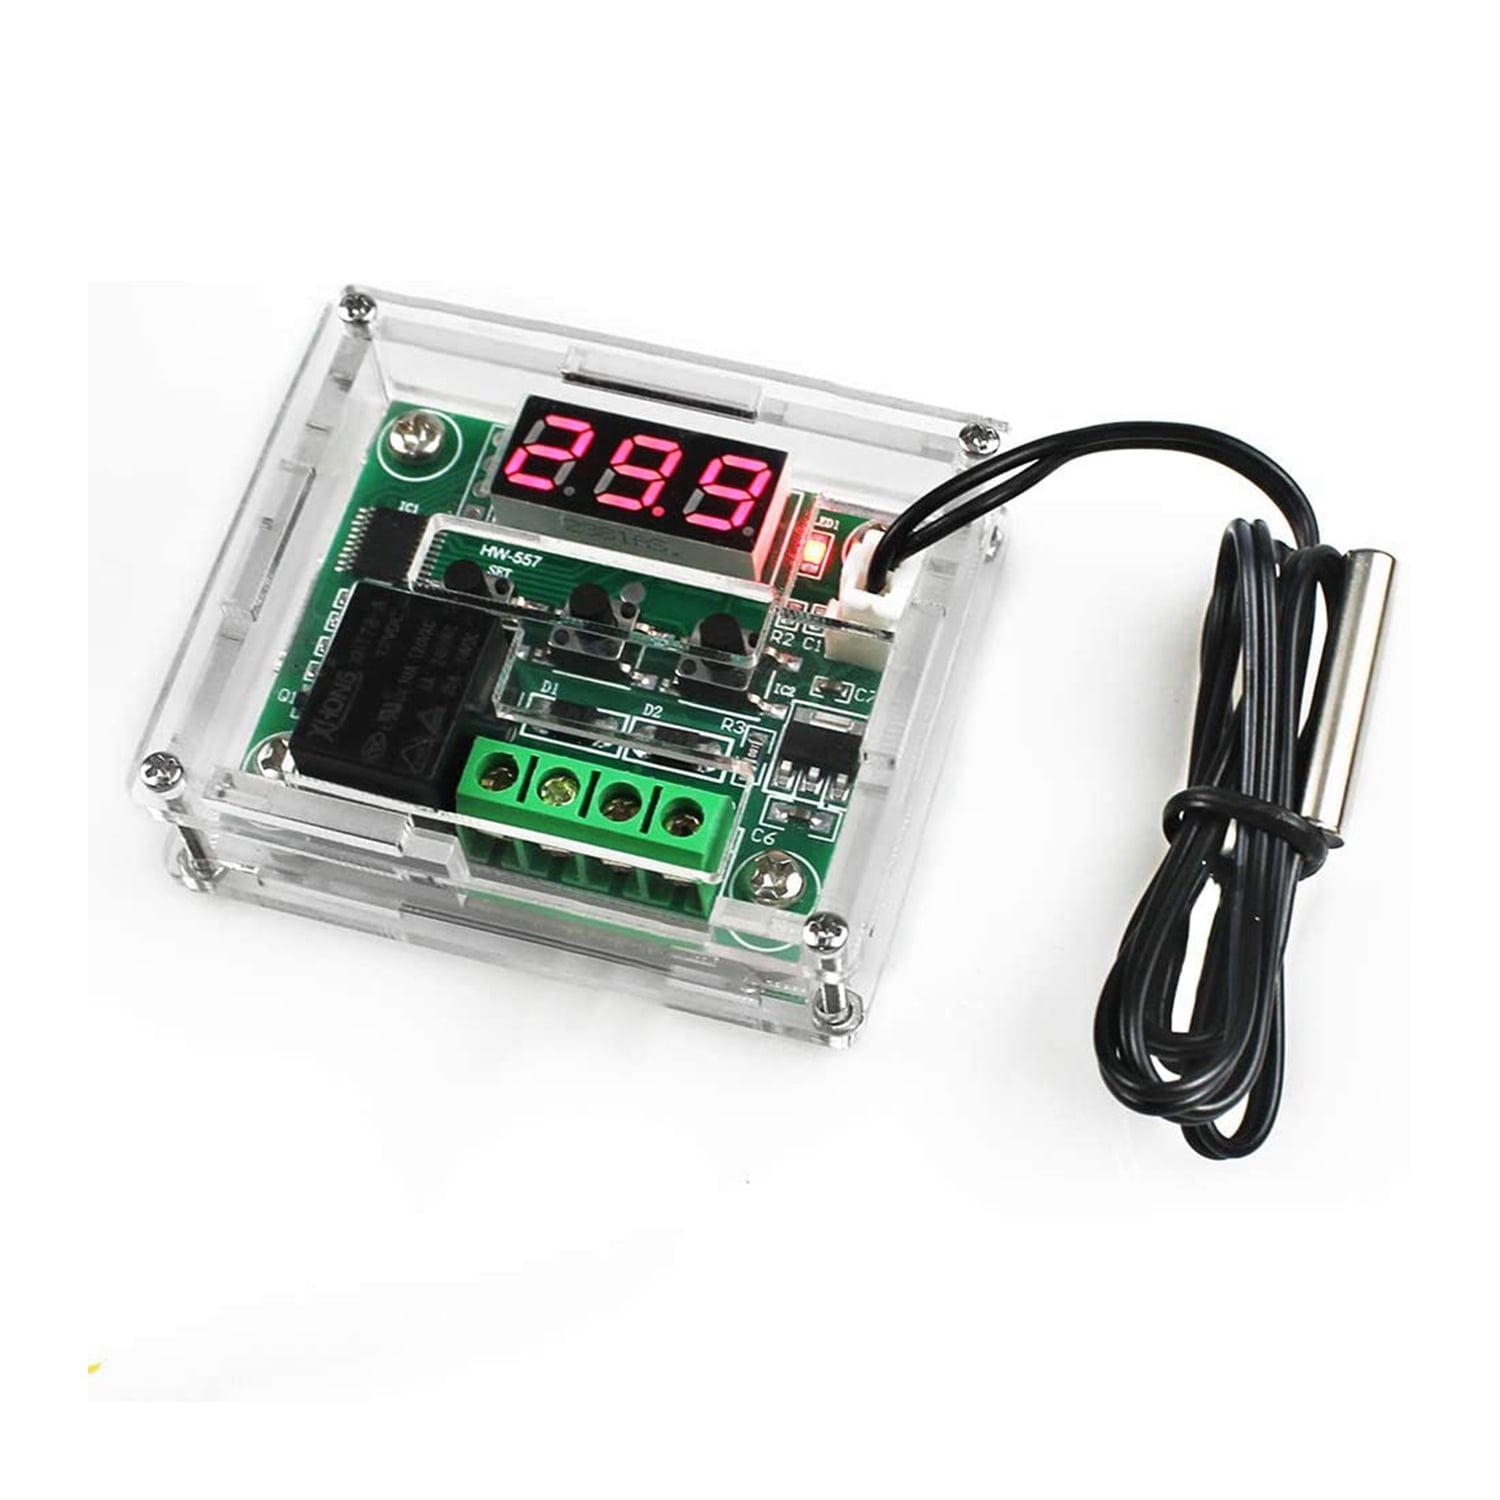 Acrylic Case Box Protector Kit For XH-W1209 Digital Temperature Control Module 